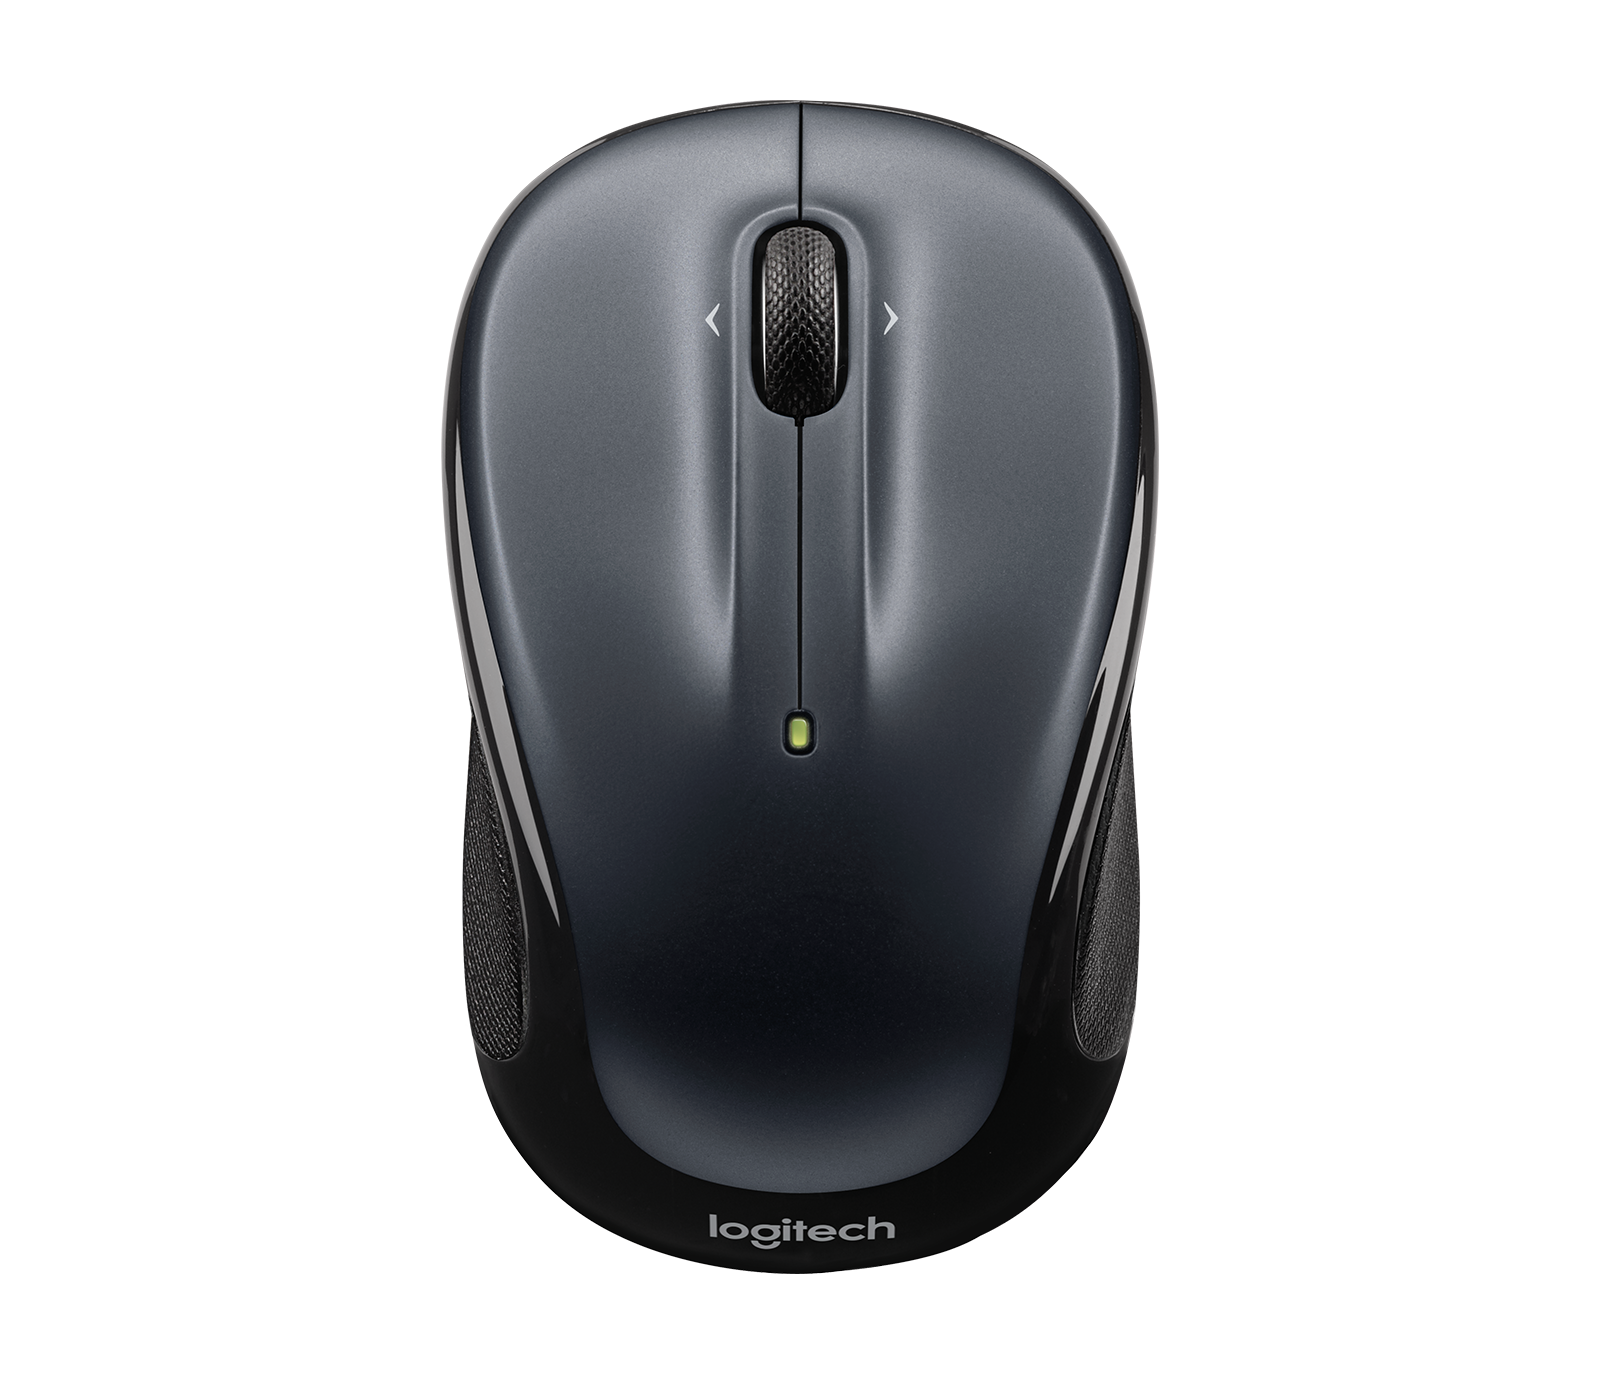 Logitech Wireless Mouse Multiple Color